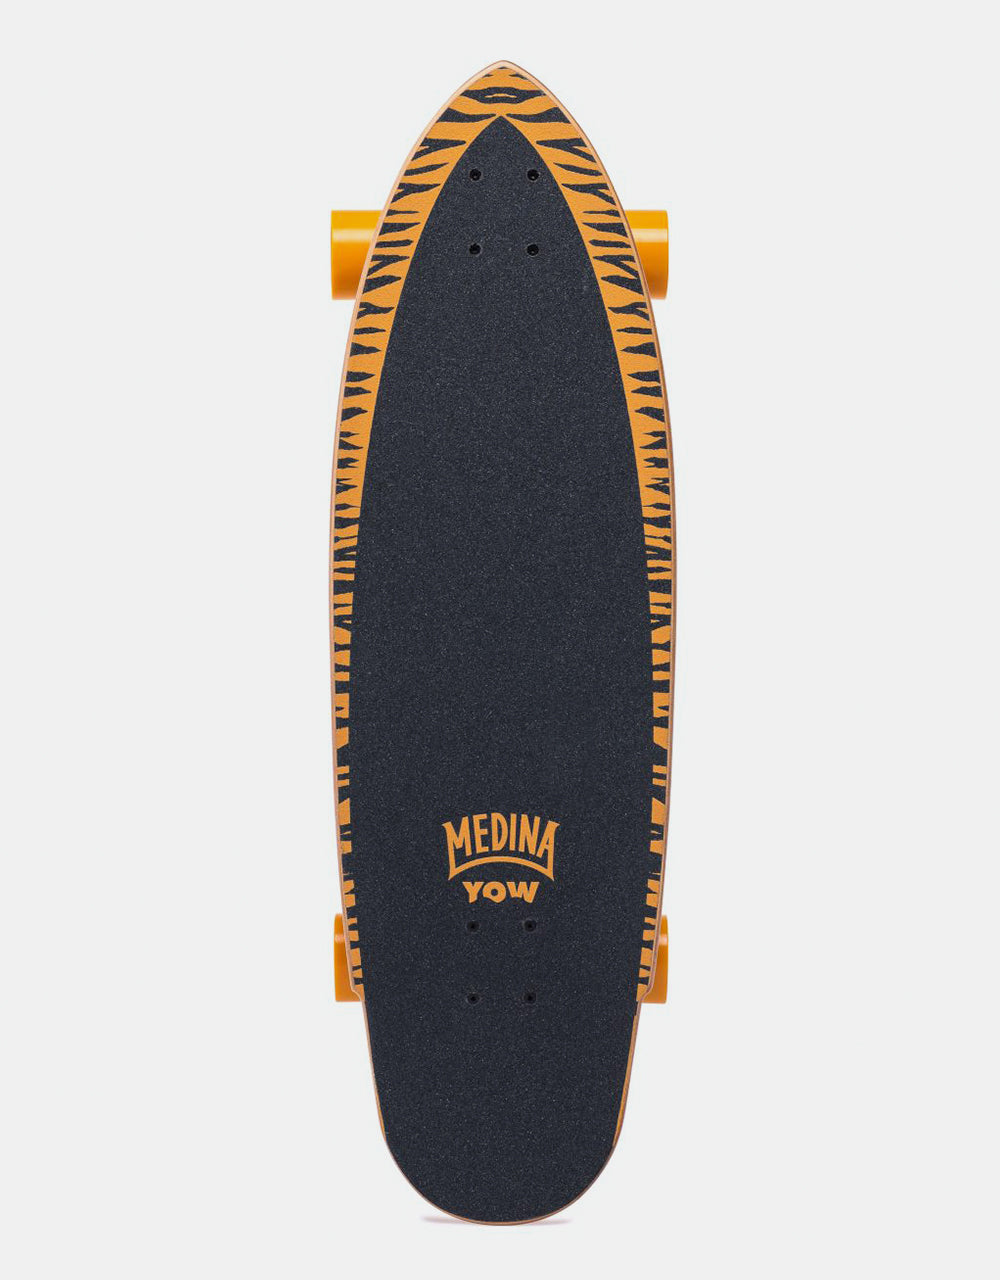 YOW Medina Bengal SurfSkate Cruiser Skateboard - 9.85" x 33"